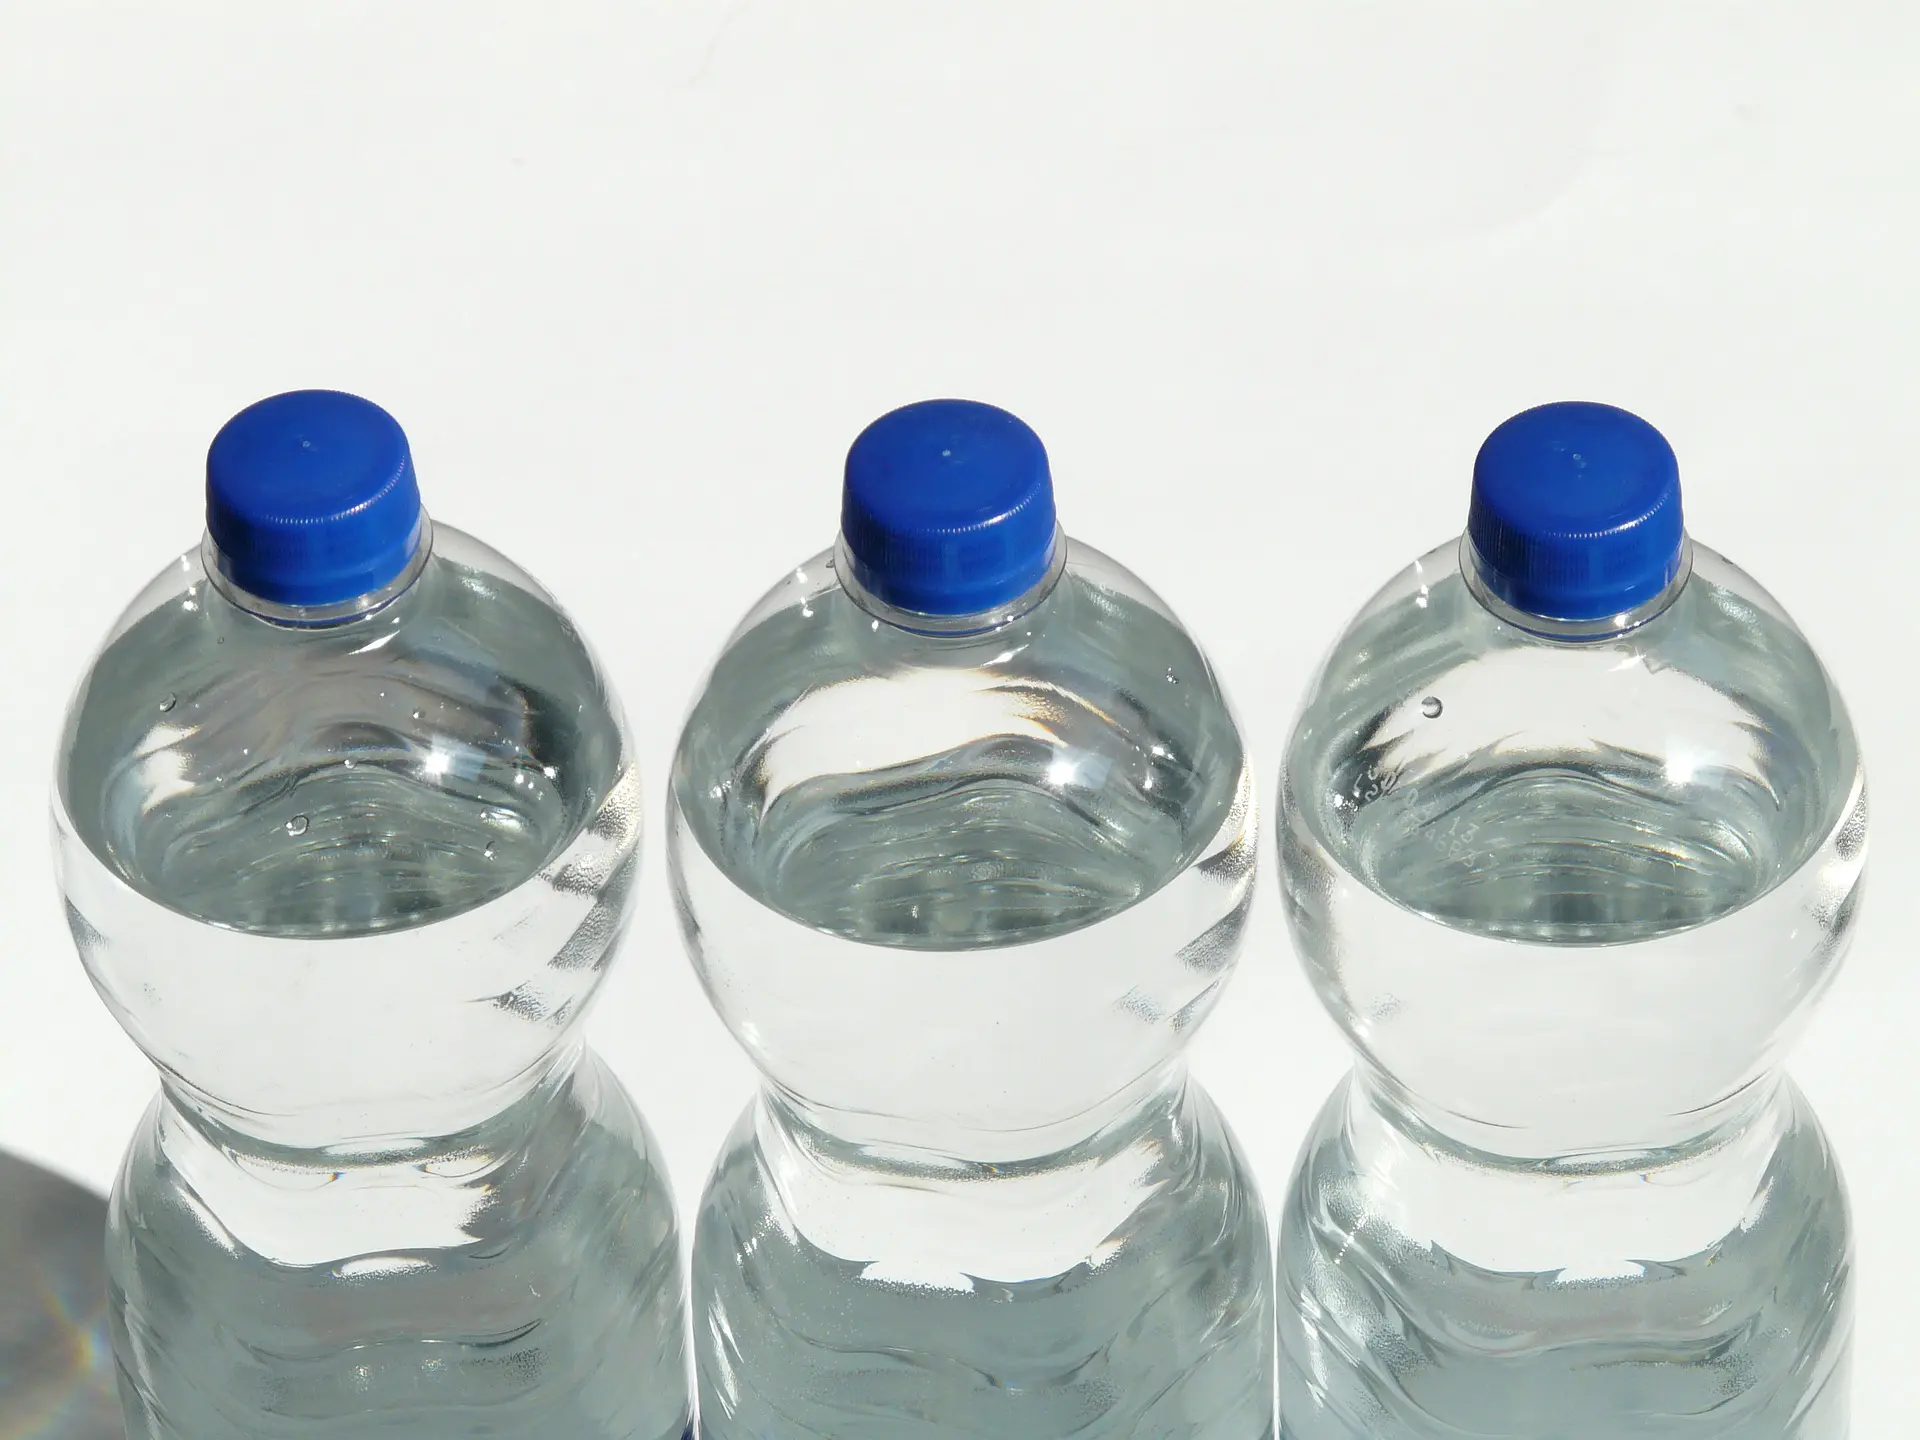 plasiotc bottle contain bisphenol-A